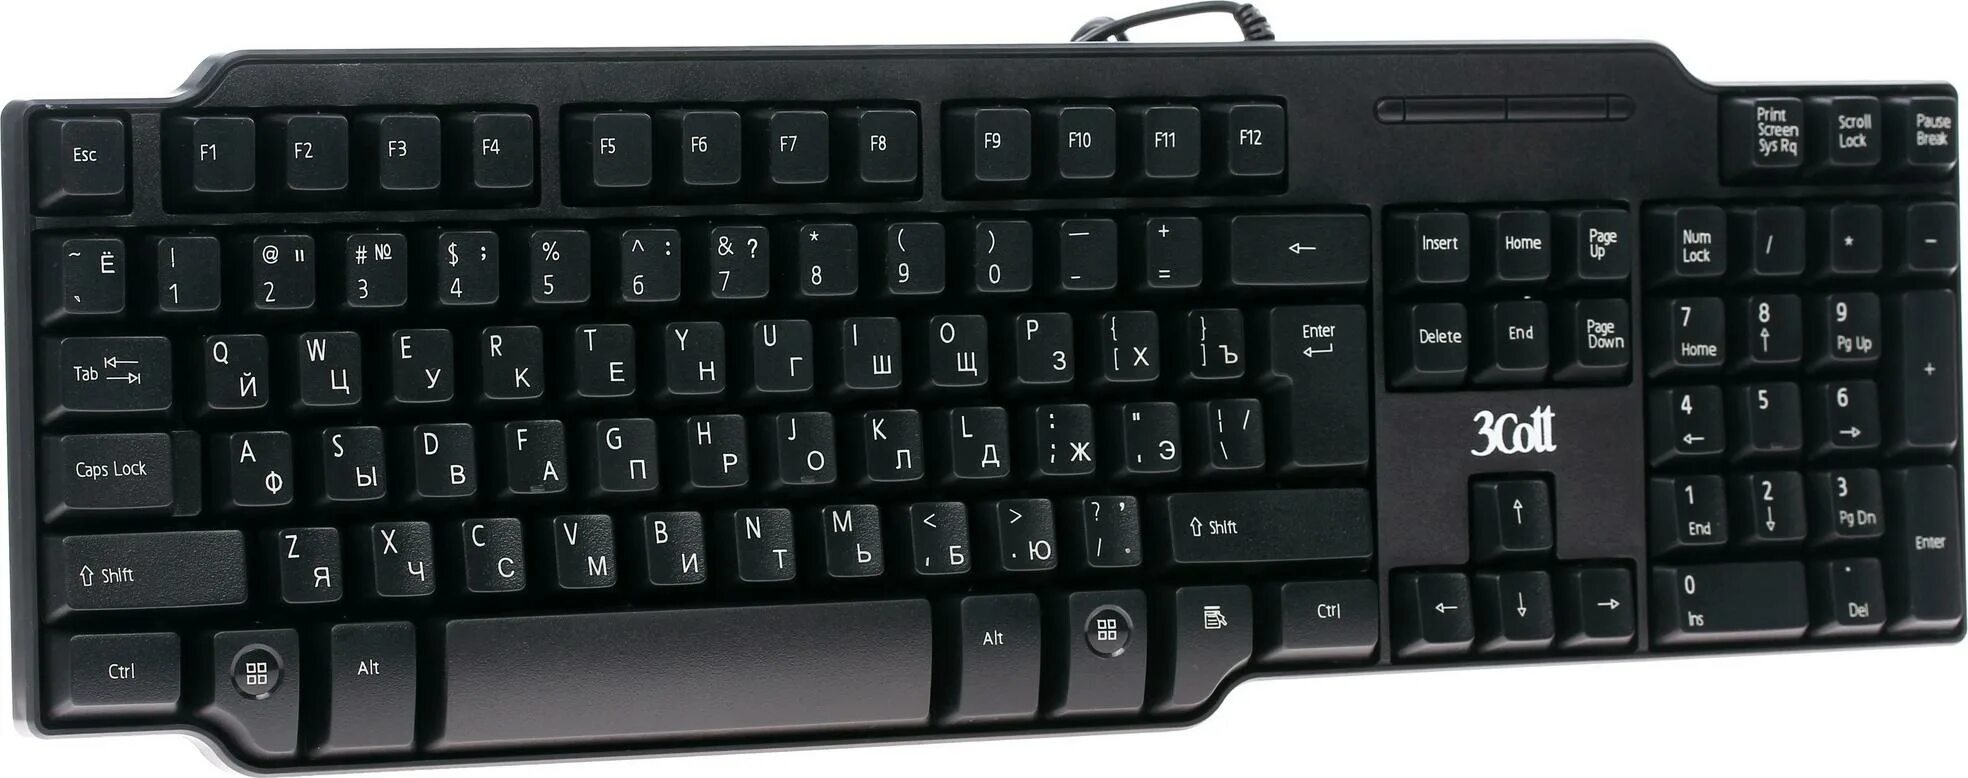 625 b 5. Клавиатура ДНС kb005bk. Клавиатура 3cott. Клавиатура DNS KB-007bk. Клавиатура 3cott модель KB-100 USB Keyboard.